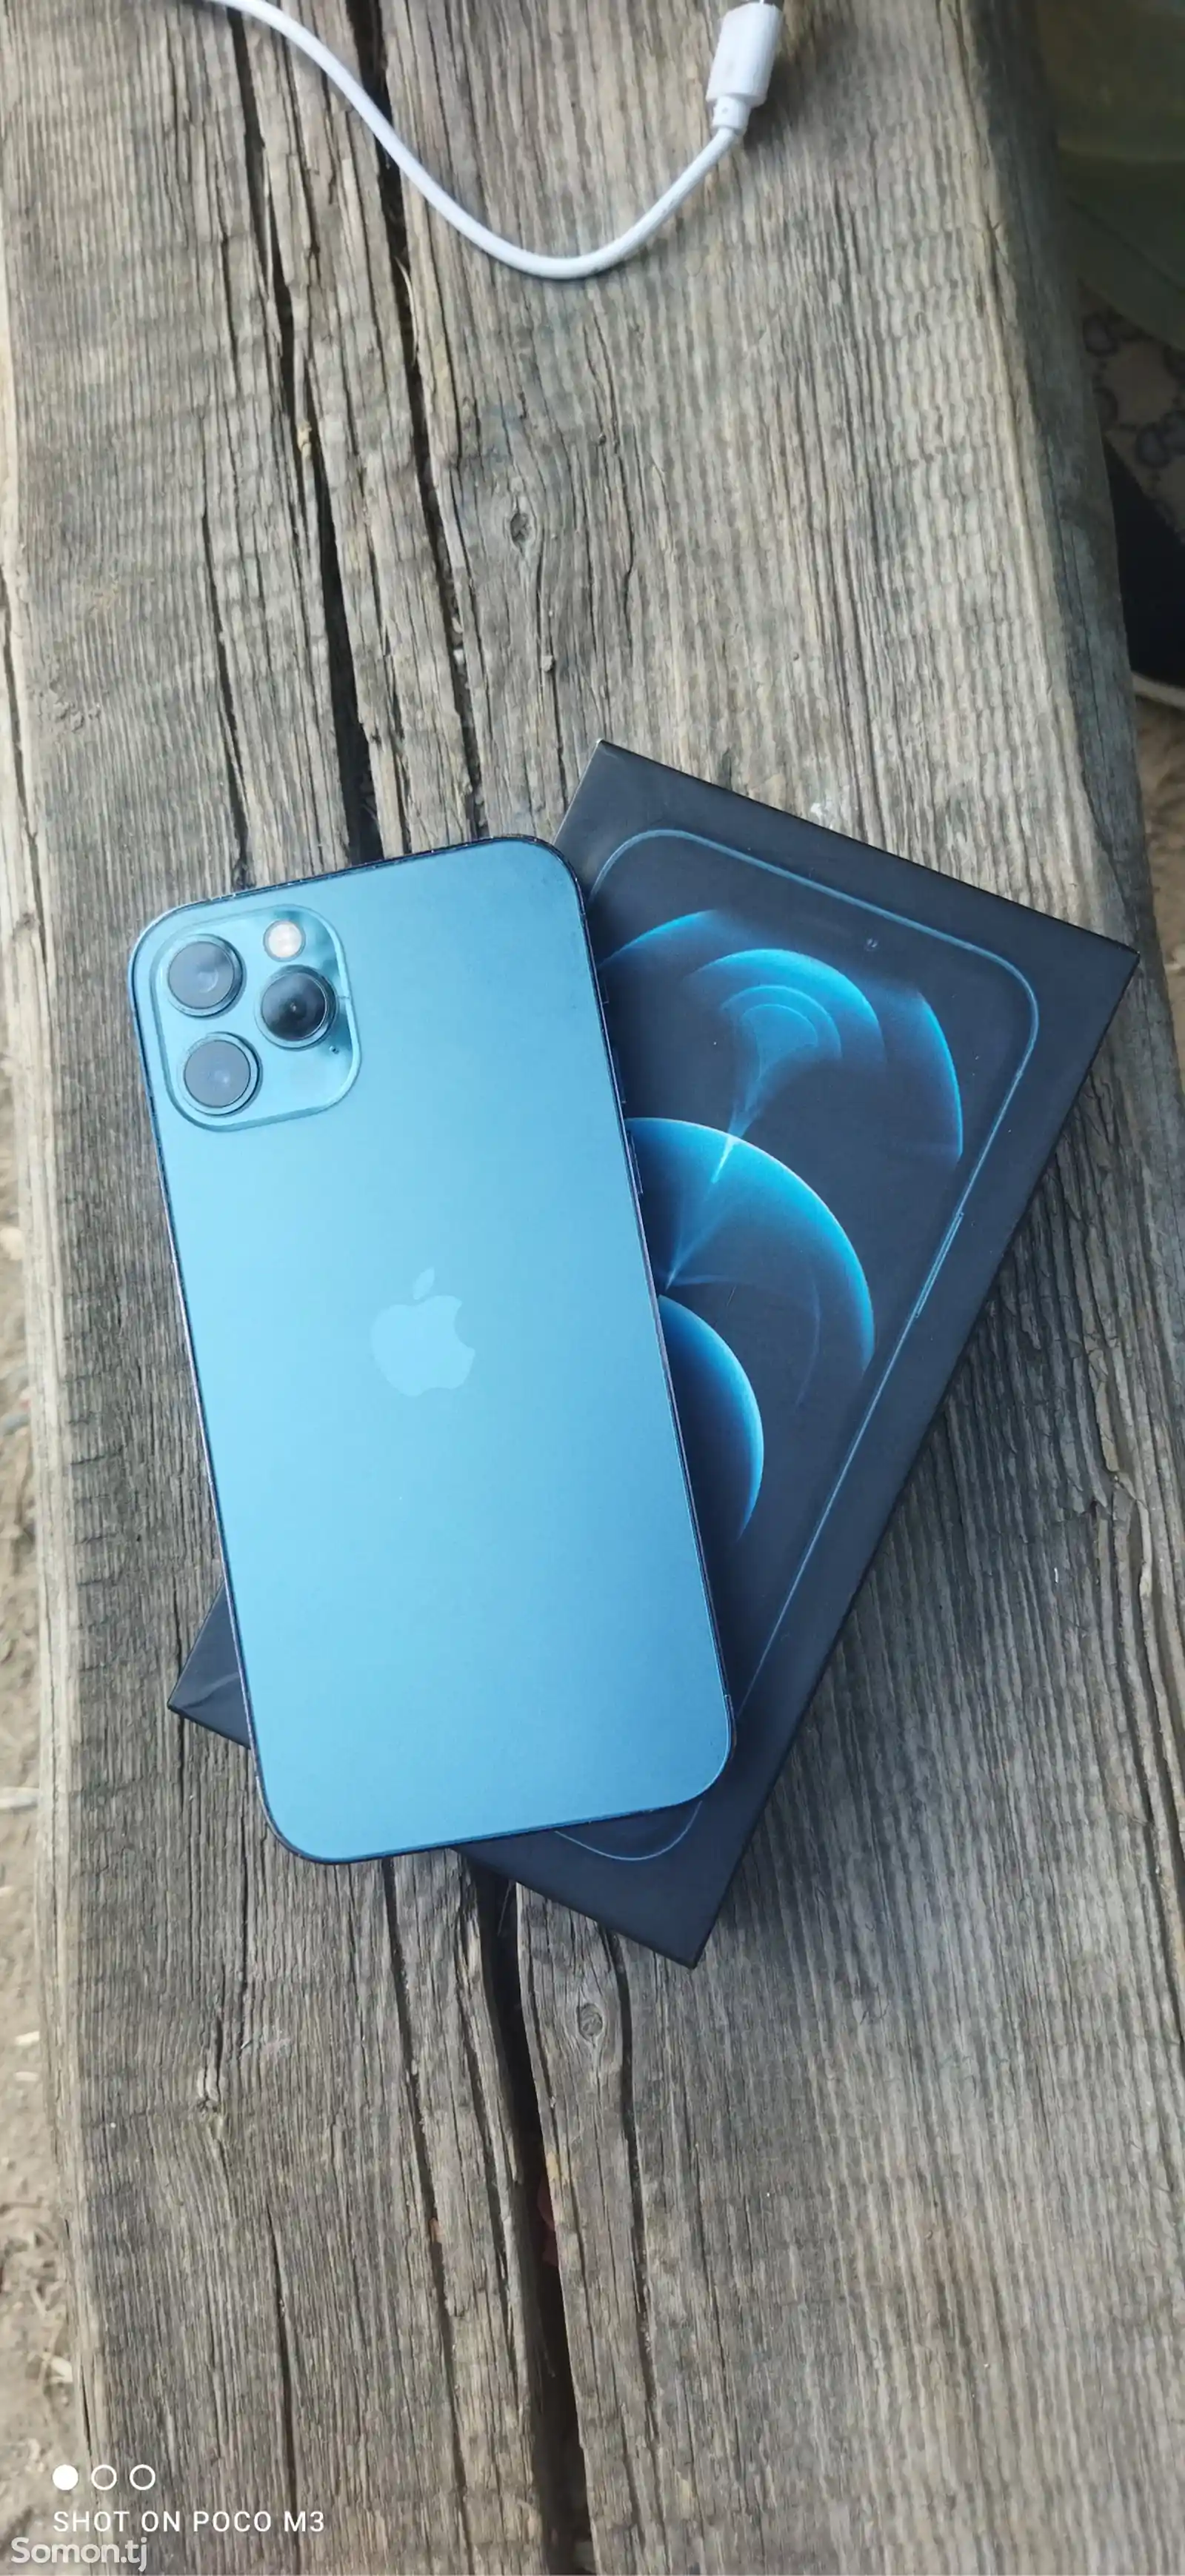 Apple iPhone 12 pro, 128 gb, Pacific Blue-7